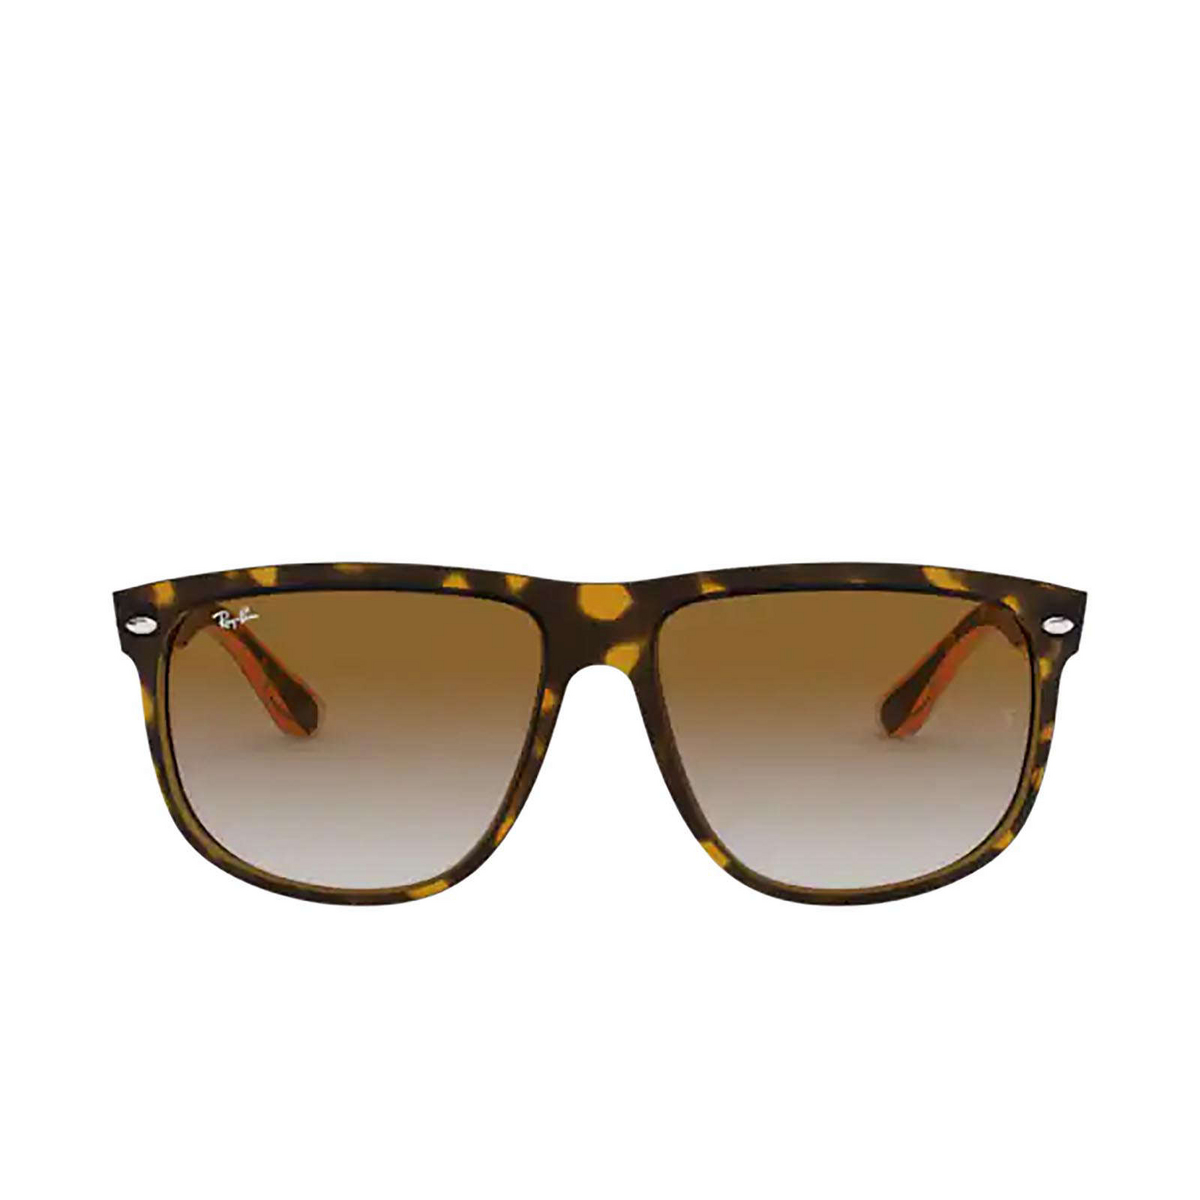 Ray-Ban BOYFRIEND Sunglasses 710/51 Light Havana - front view